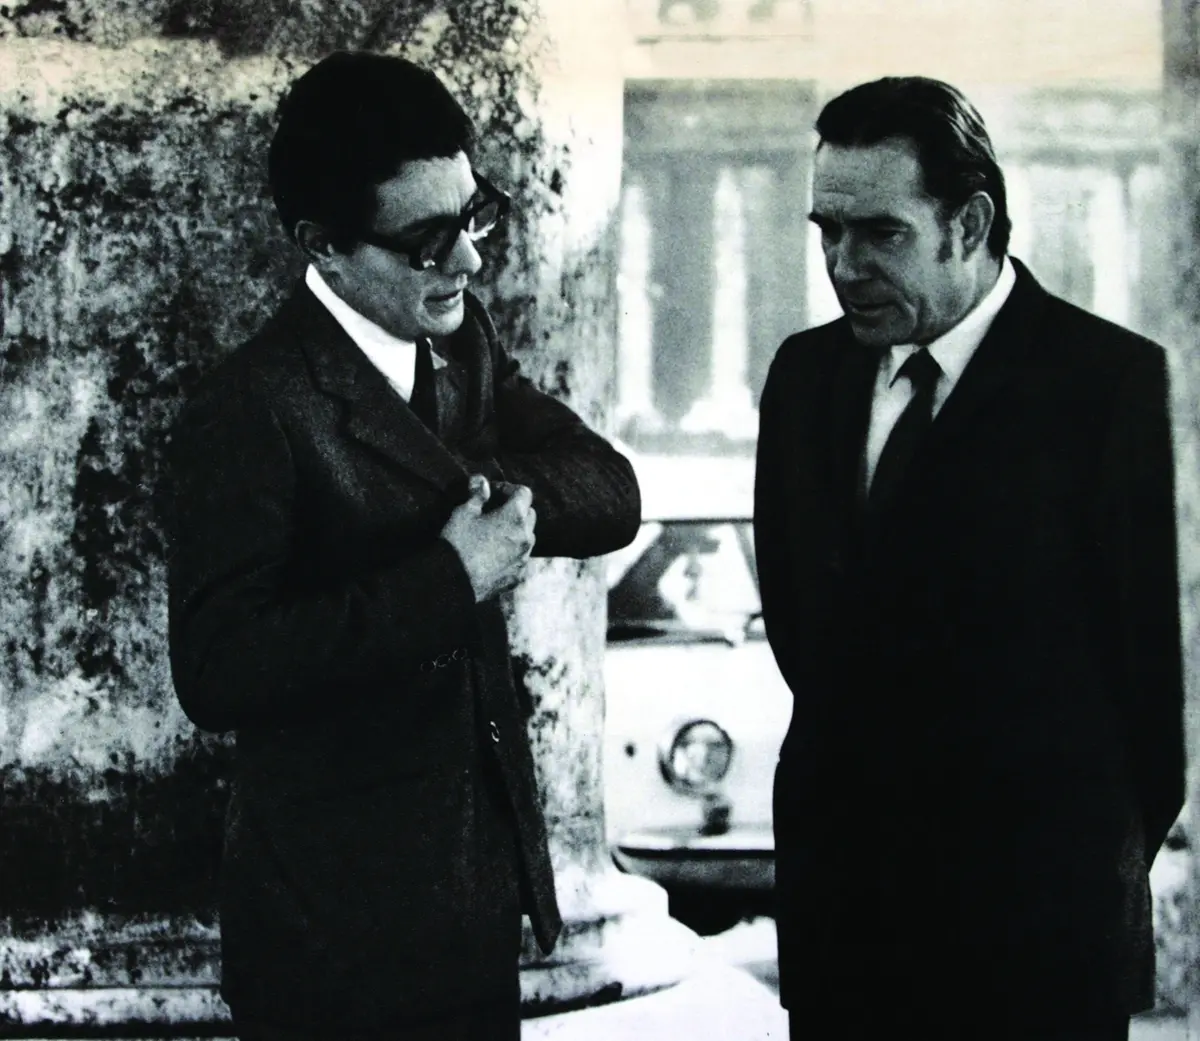 Enzo Jannacci e Ugo Tognazzi ne L'udienza di Marco Ferreri (1972), credits Webphoto